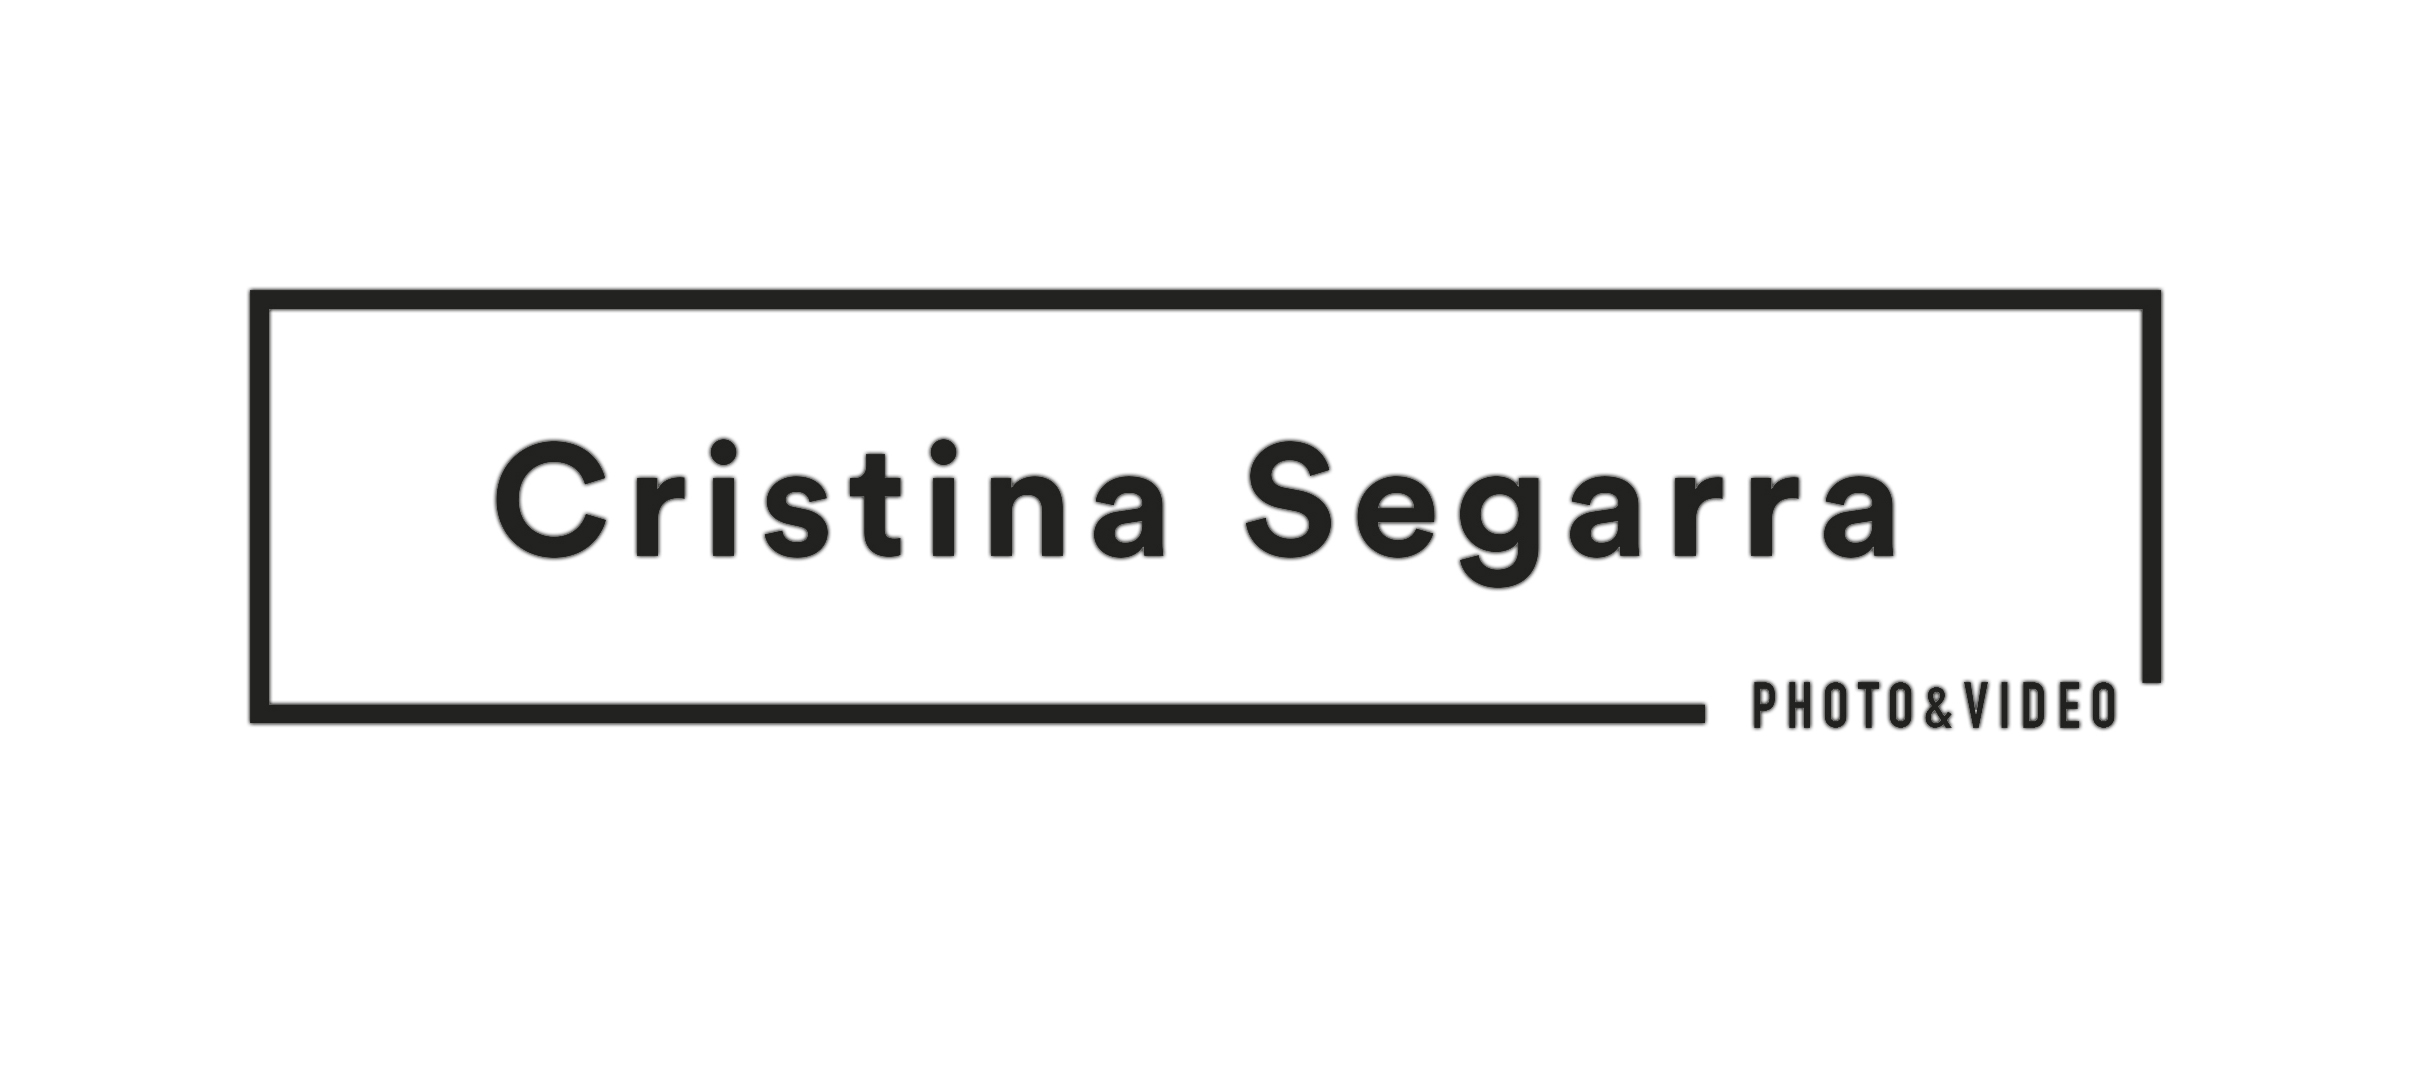 Cristina Segarra